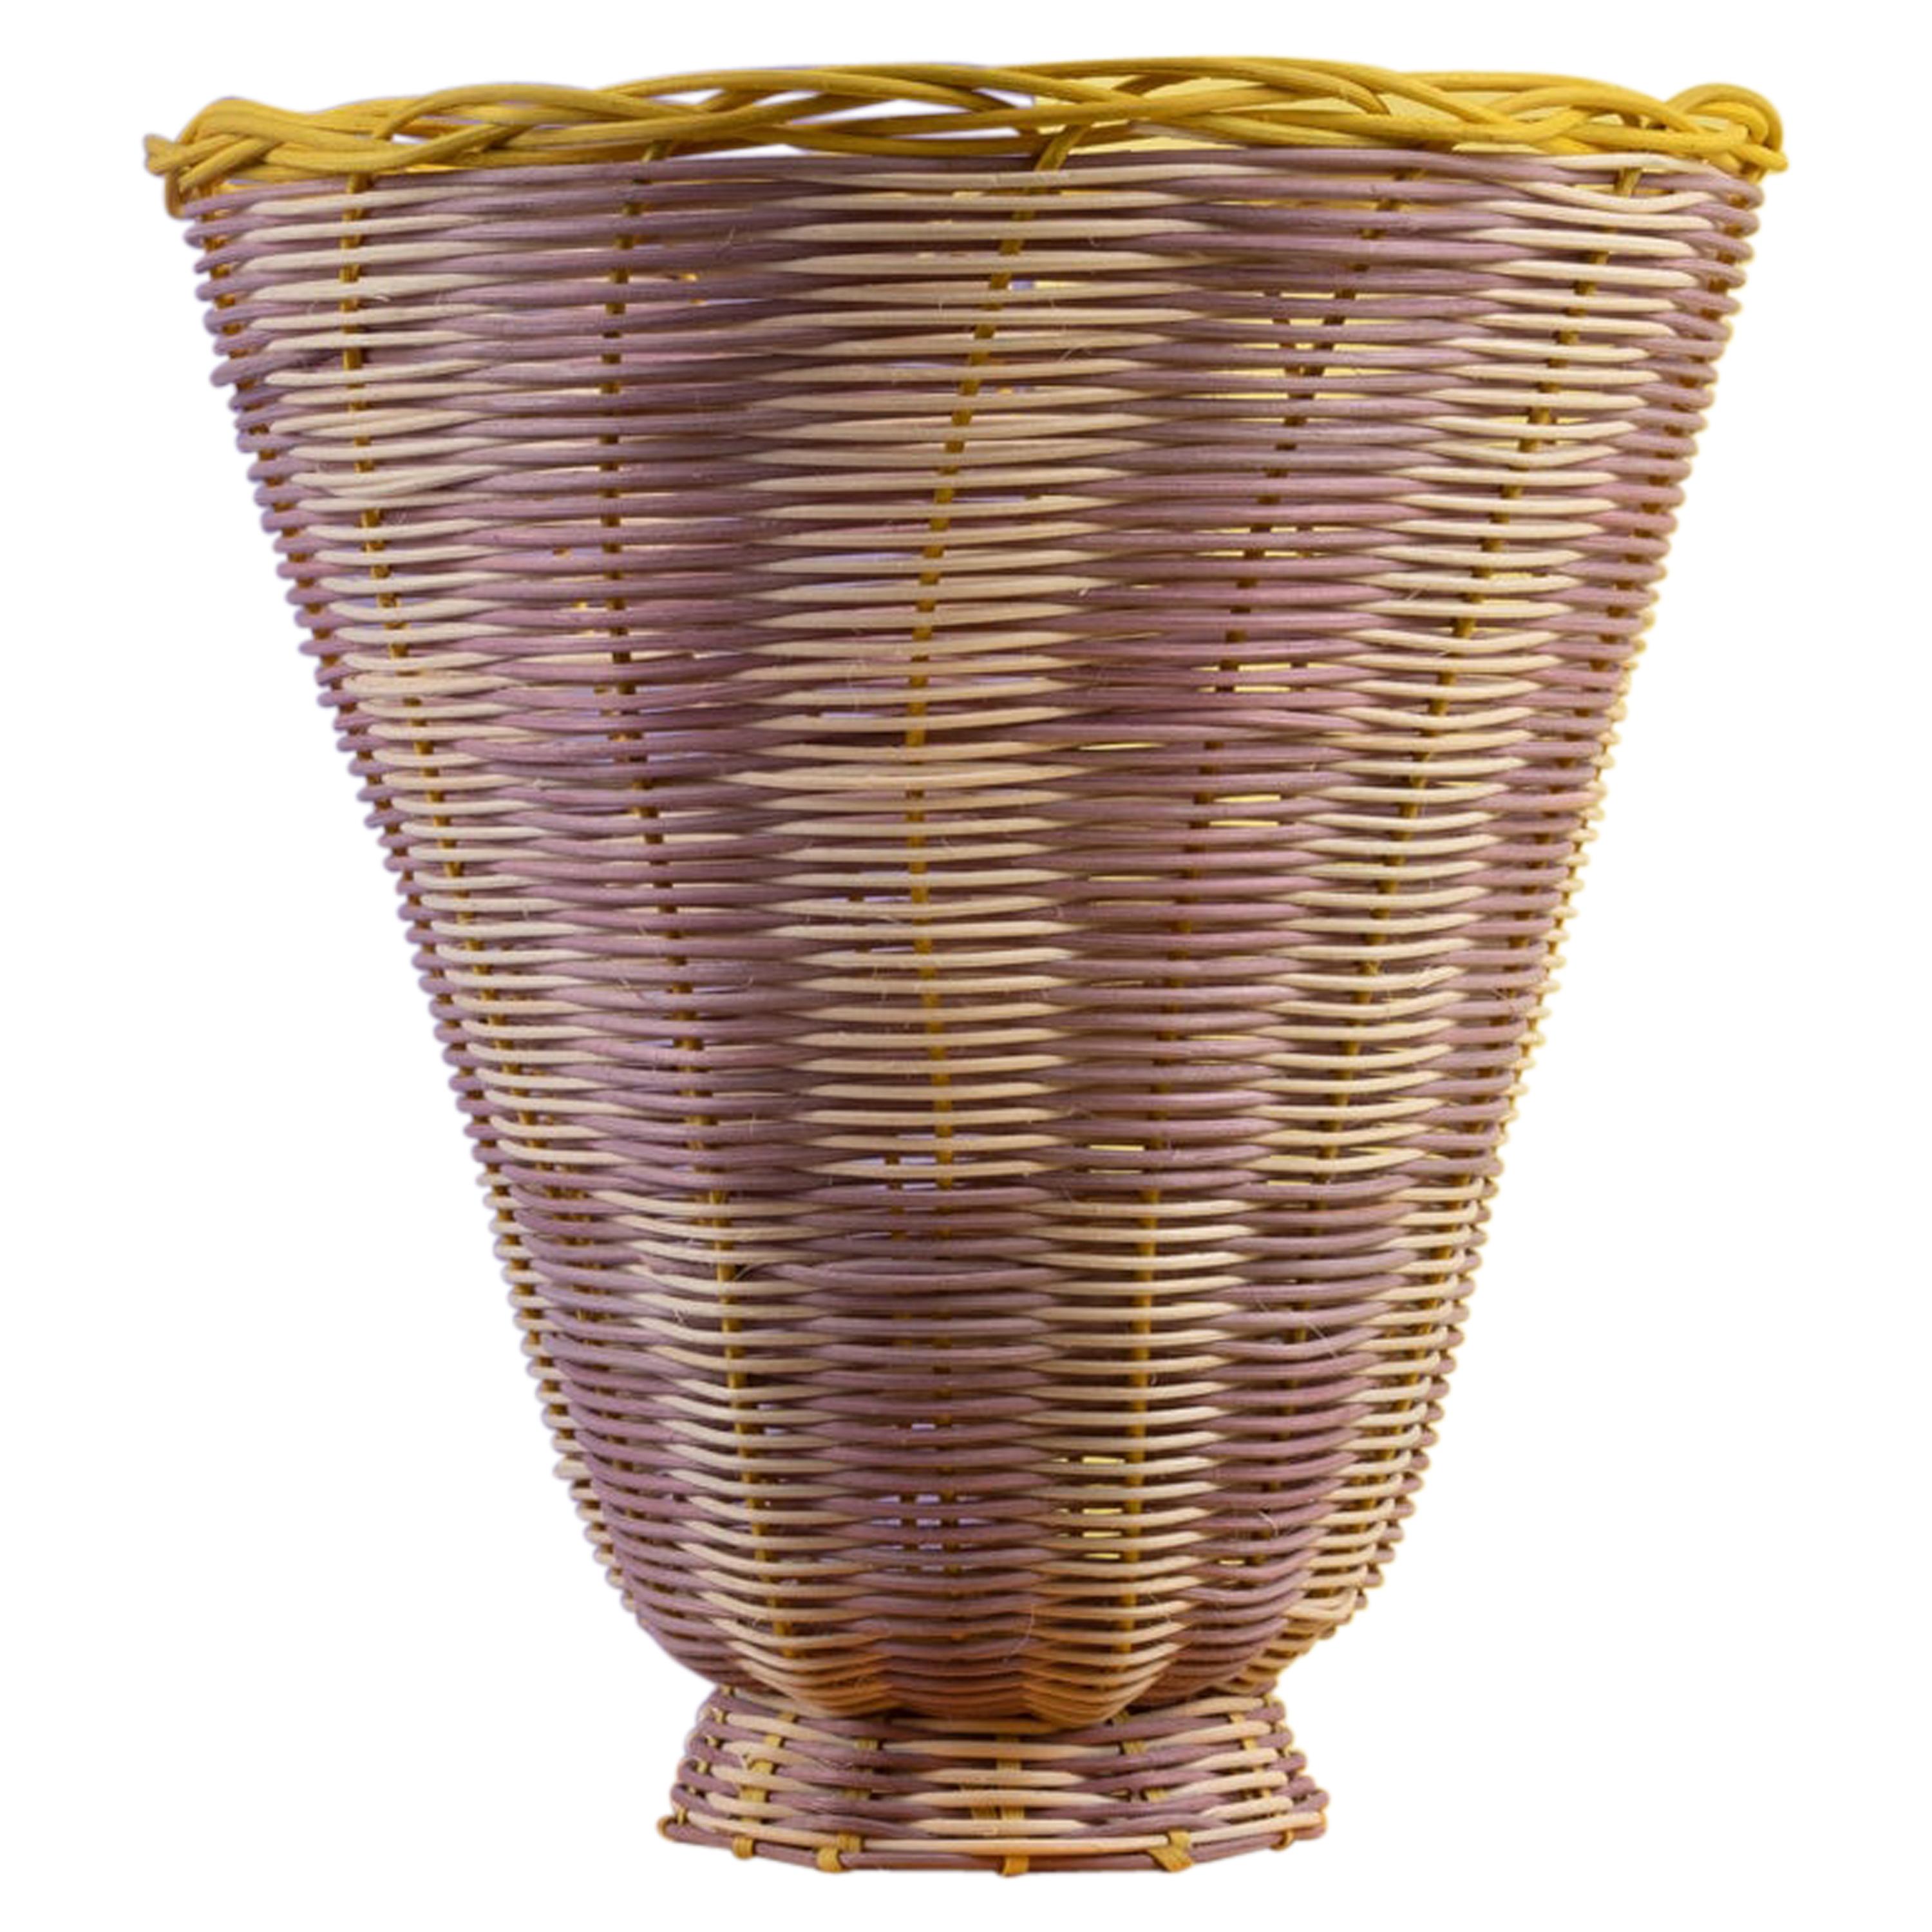 Petal Vase hand woven in Lavender, Natural and Lemon by Studio Herron